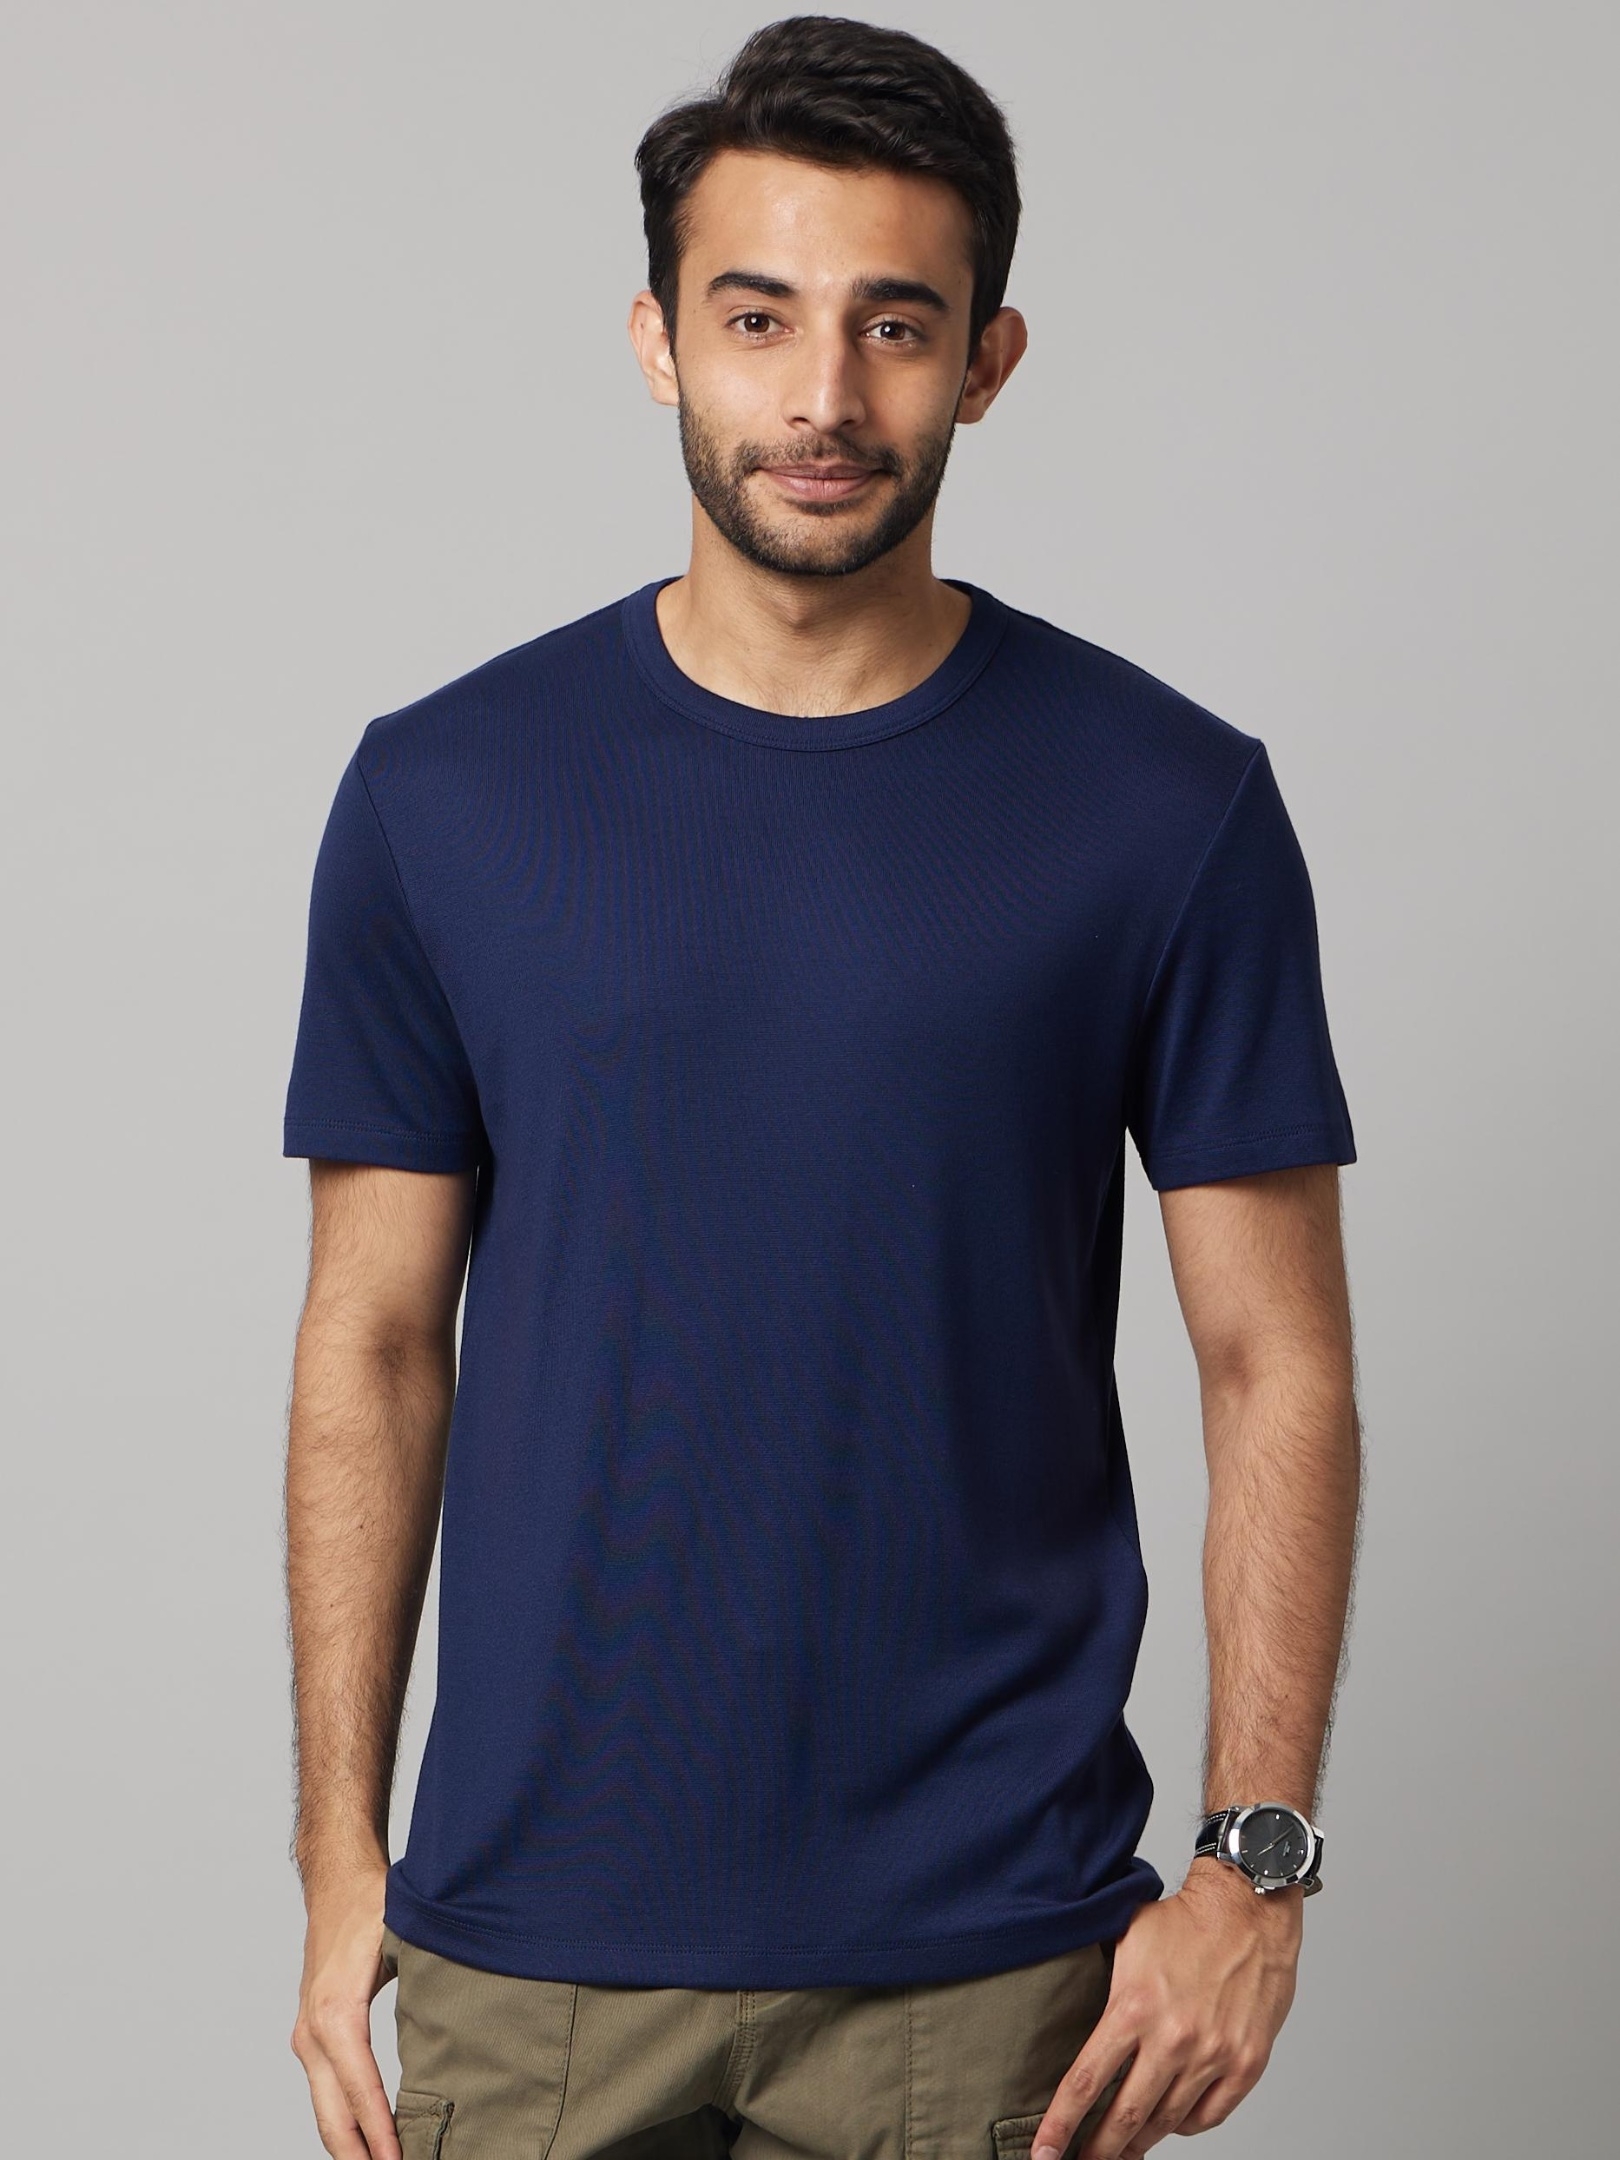 Celio Solid Navy Blue Short Sleeves Round Neck Tshirt